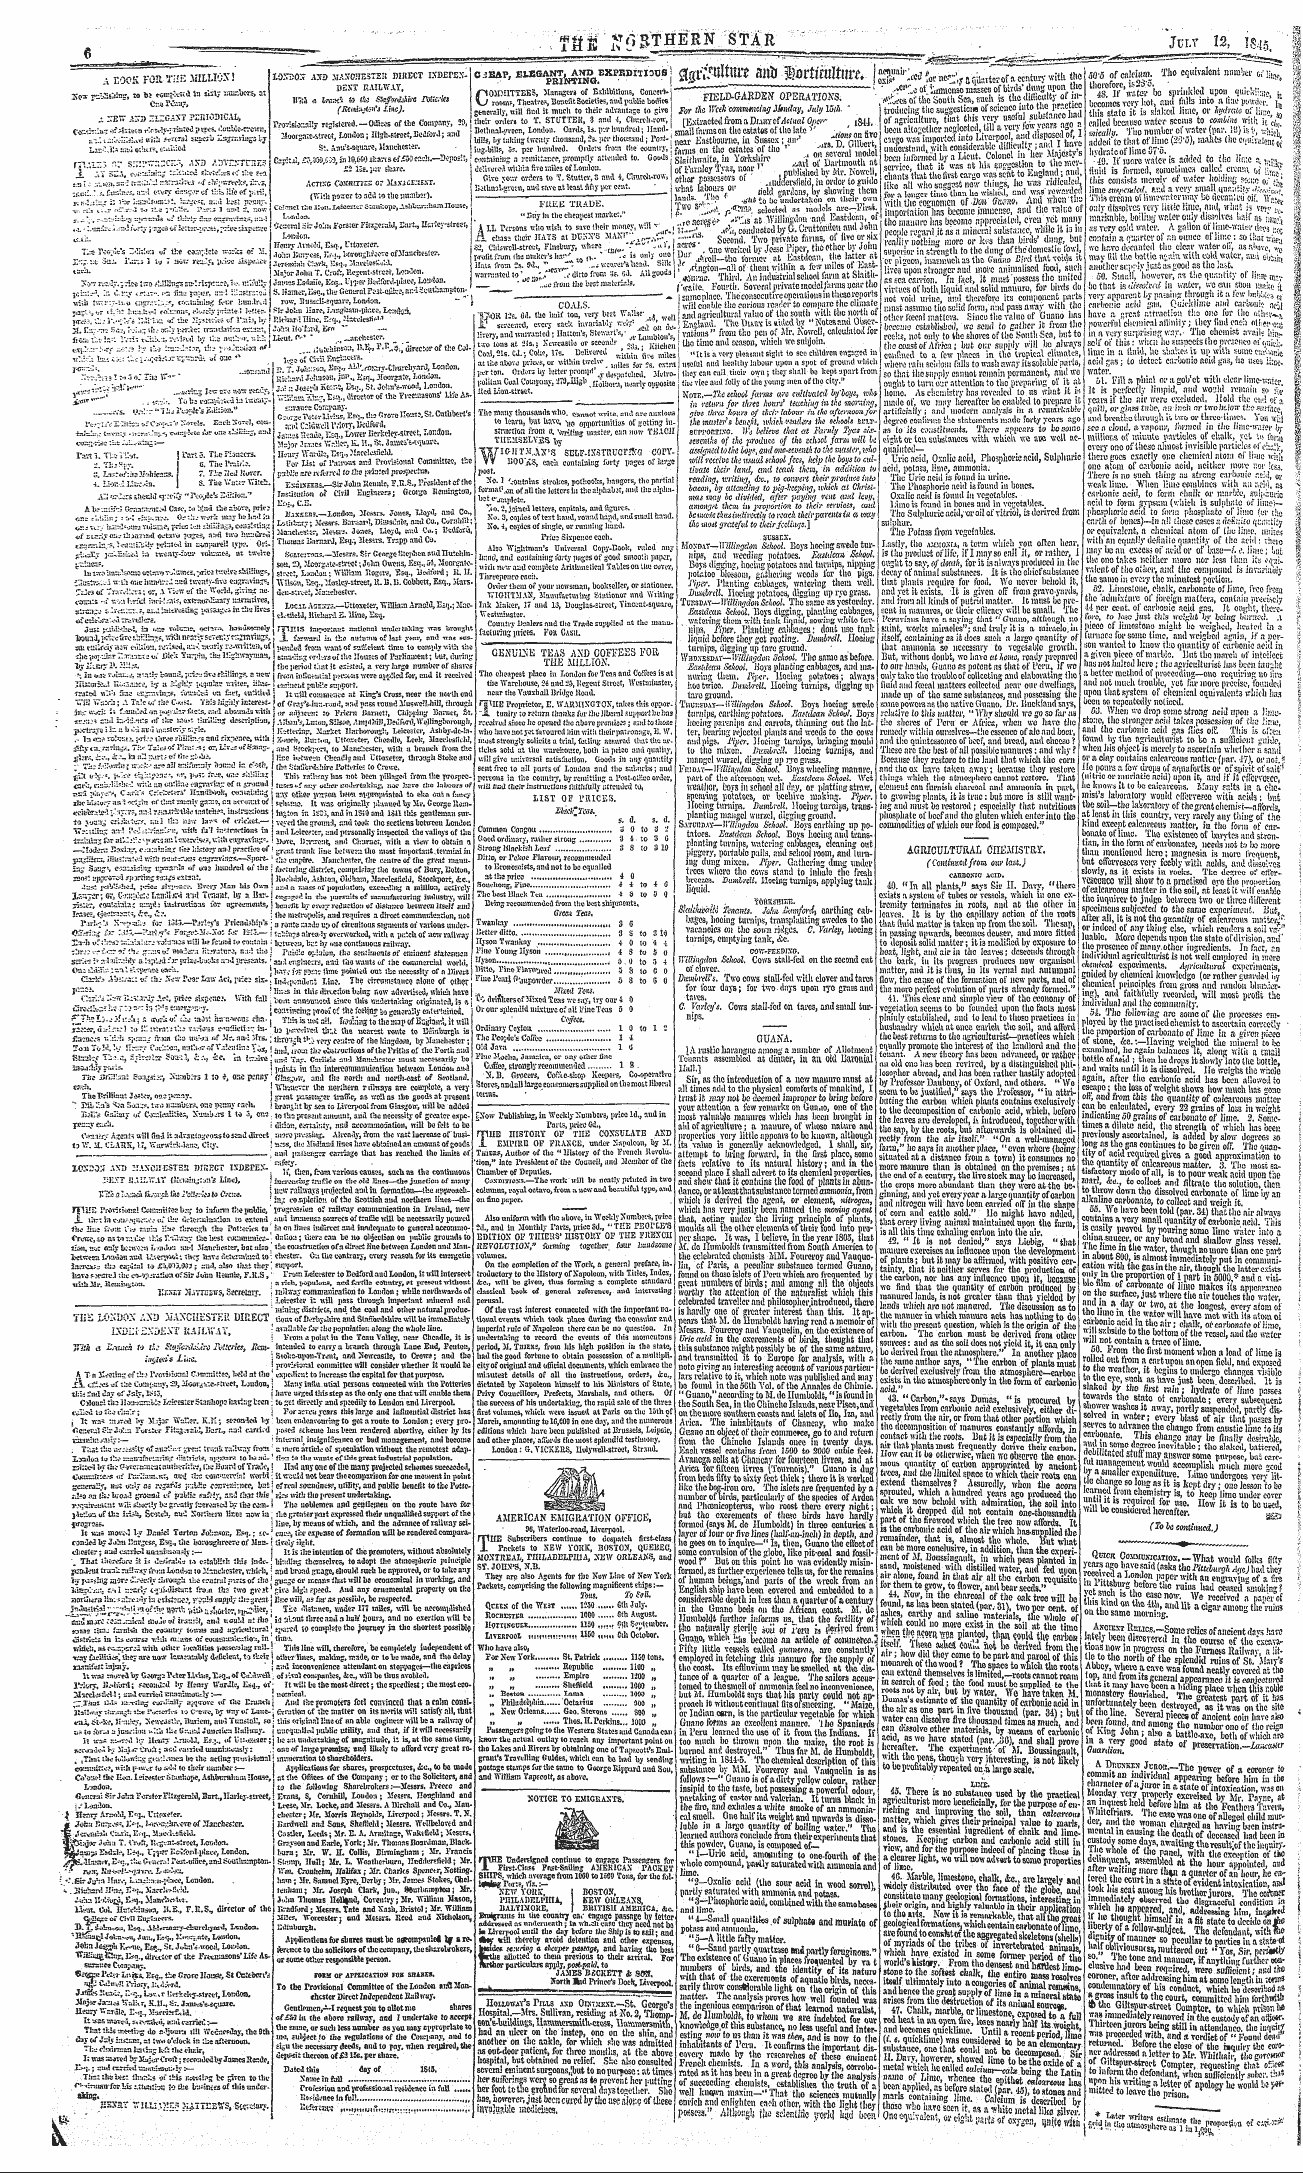 Northern Star (1837-1852): jS F Y, 2nd edition - Aorviwture Aitir Iiwttwltfav